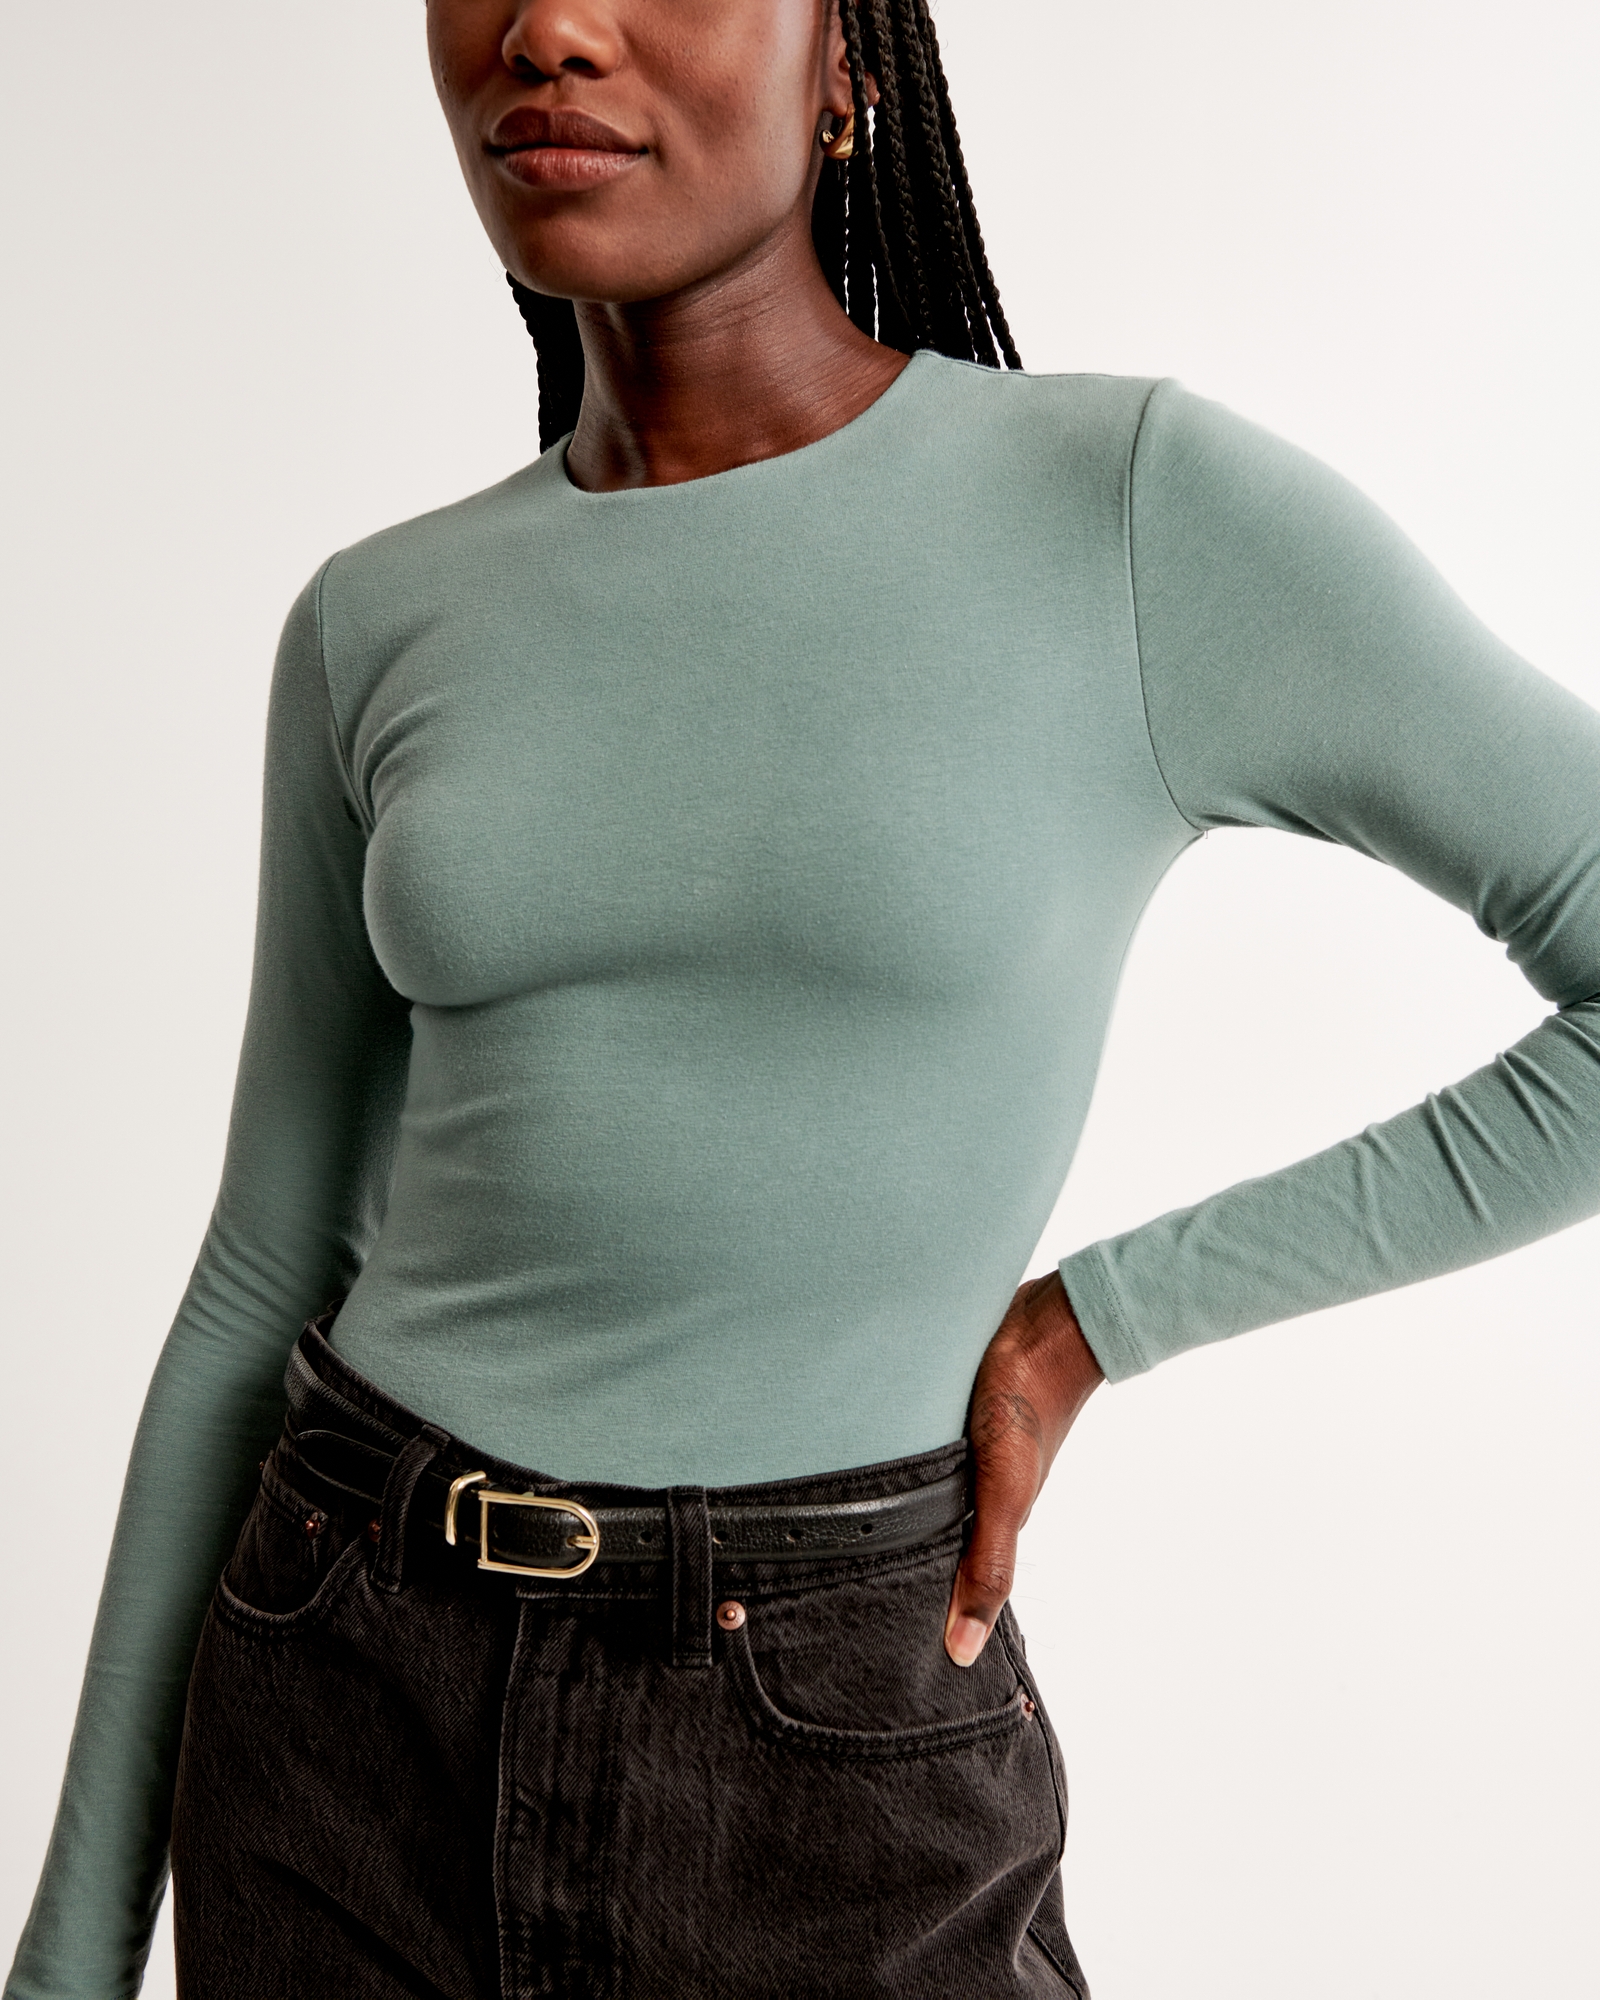 Women's Short-Sleeve Cotton-Blend Seamless Fabric Crew Bodysuit